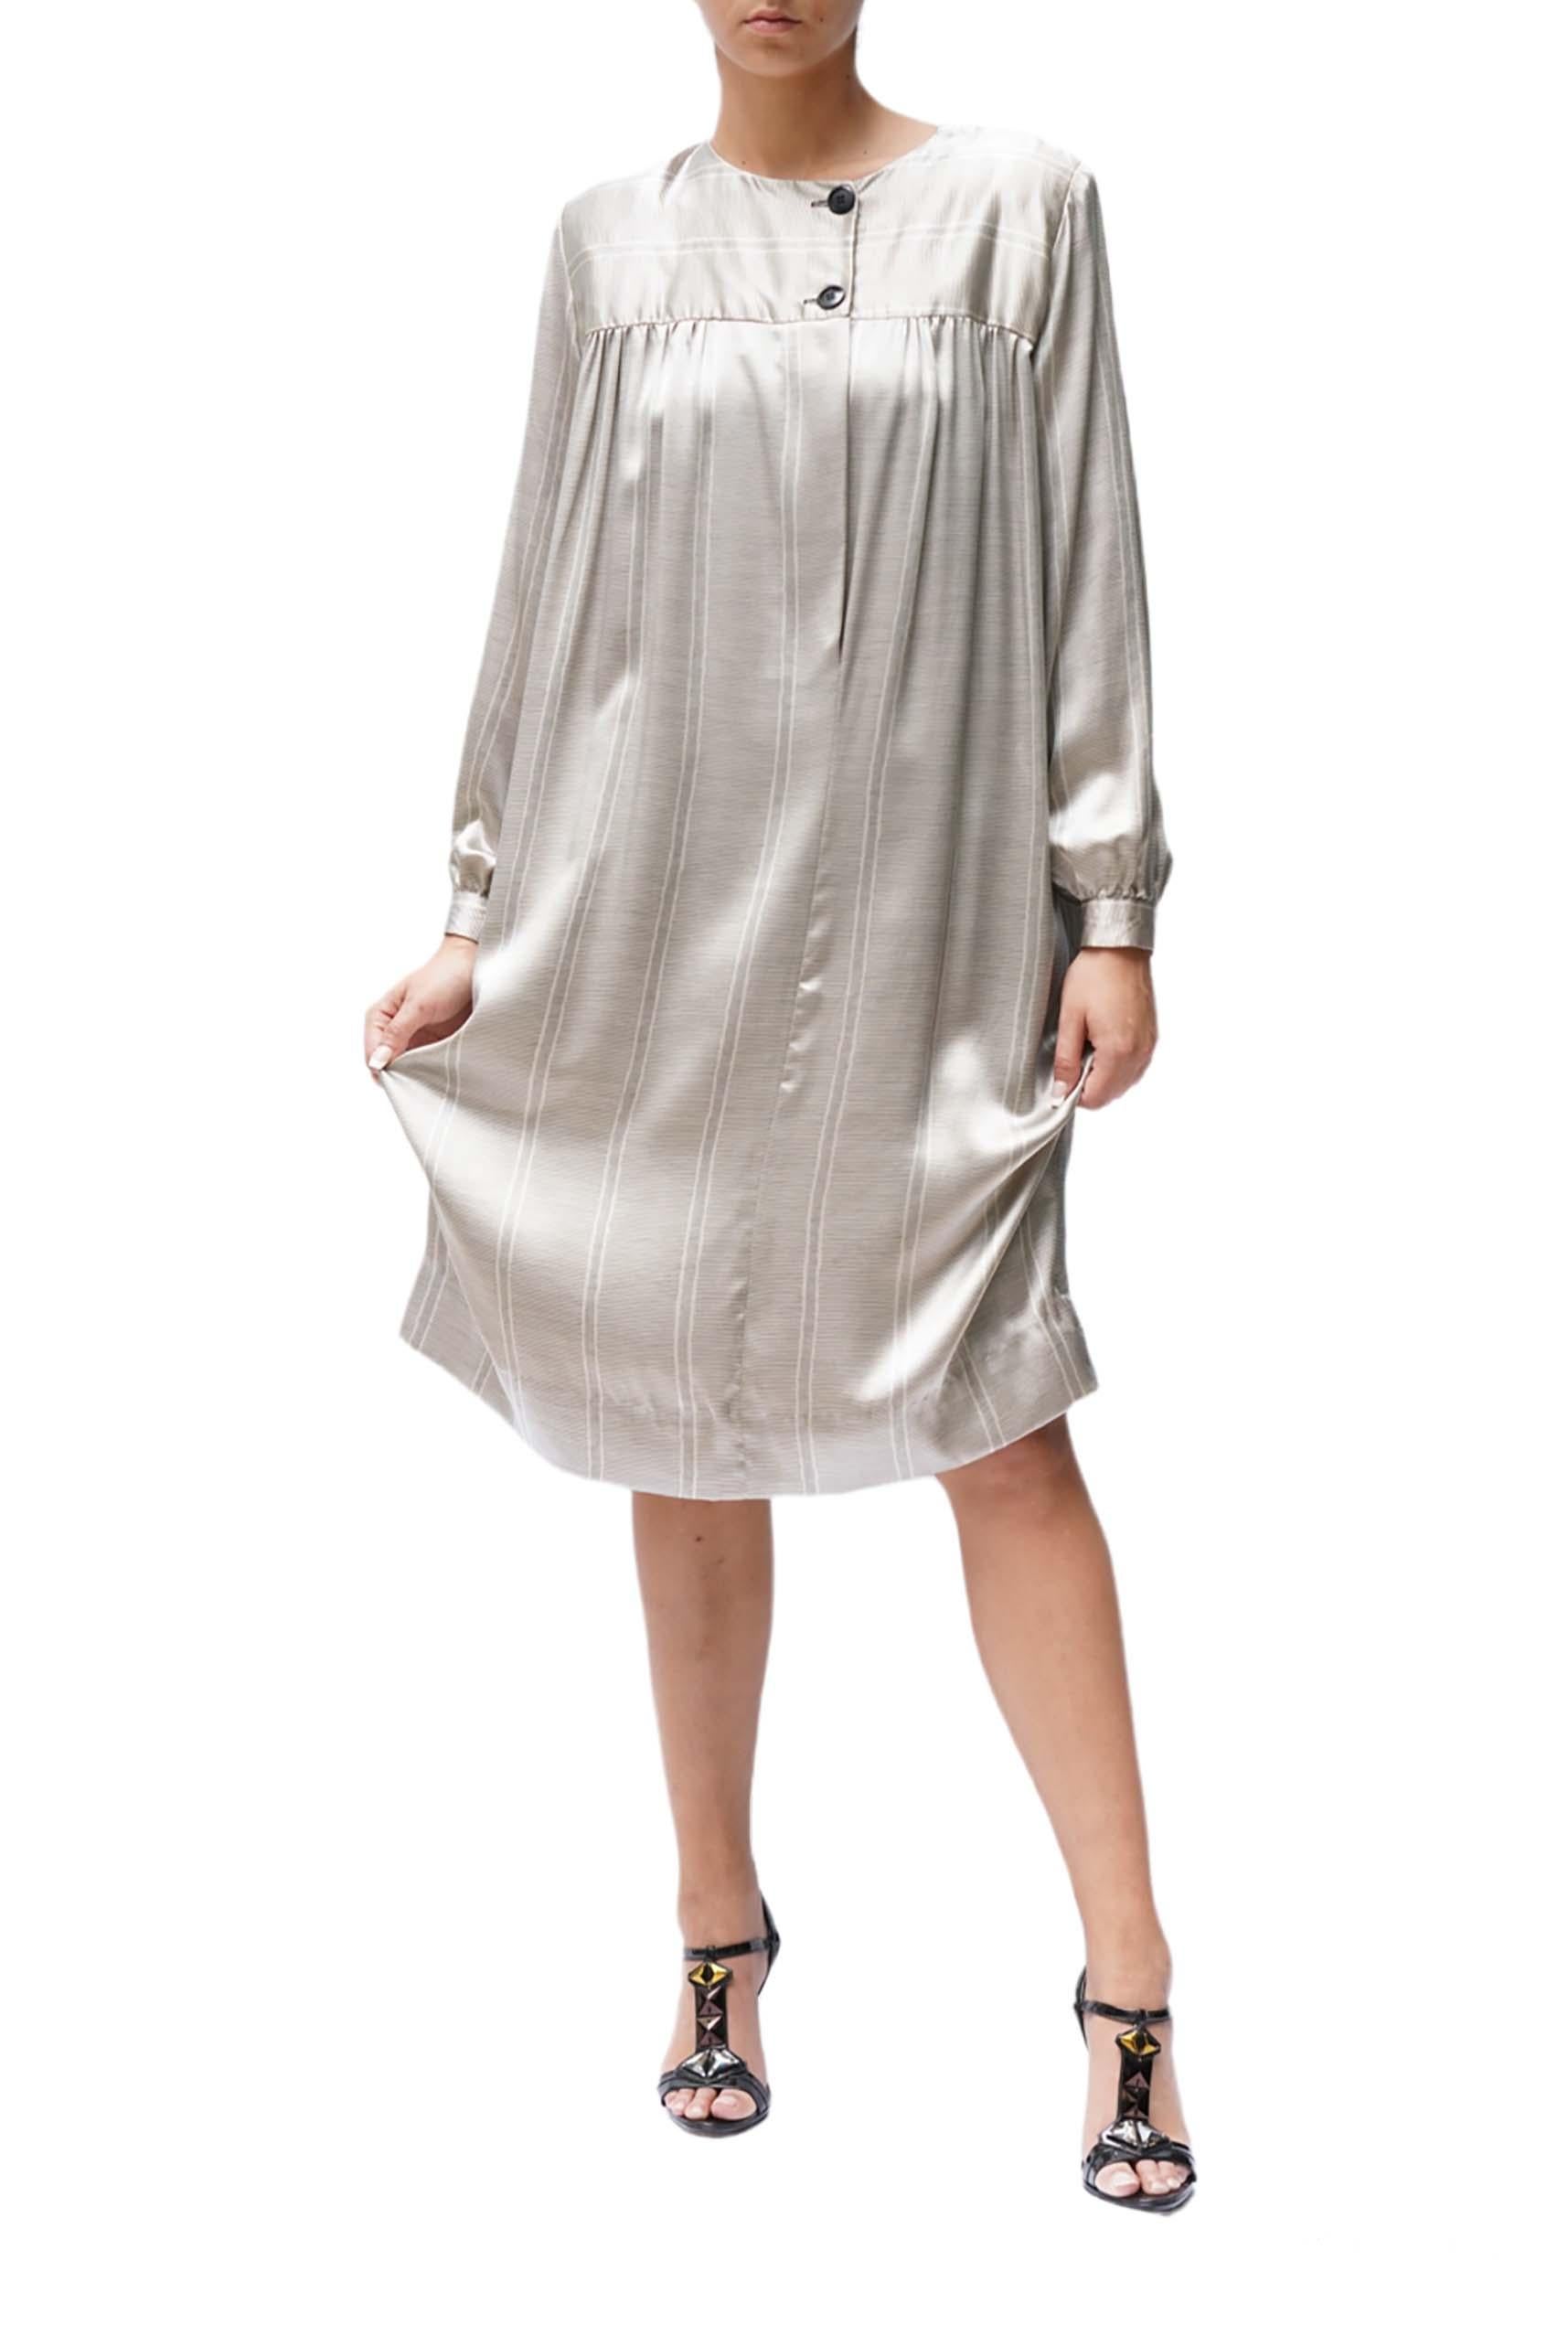 Silk Dress with pockets

Bust - 44

Waist - 52

Length - 43